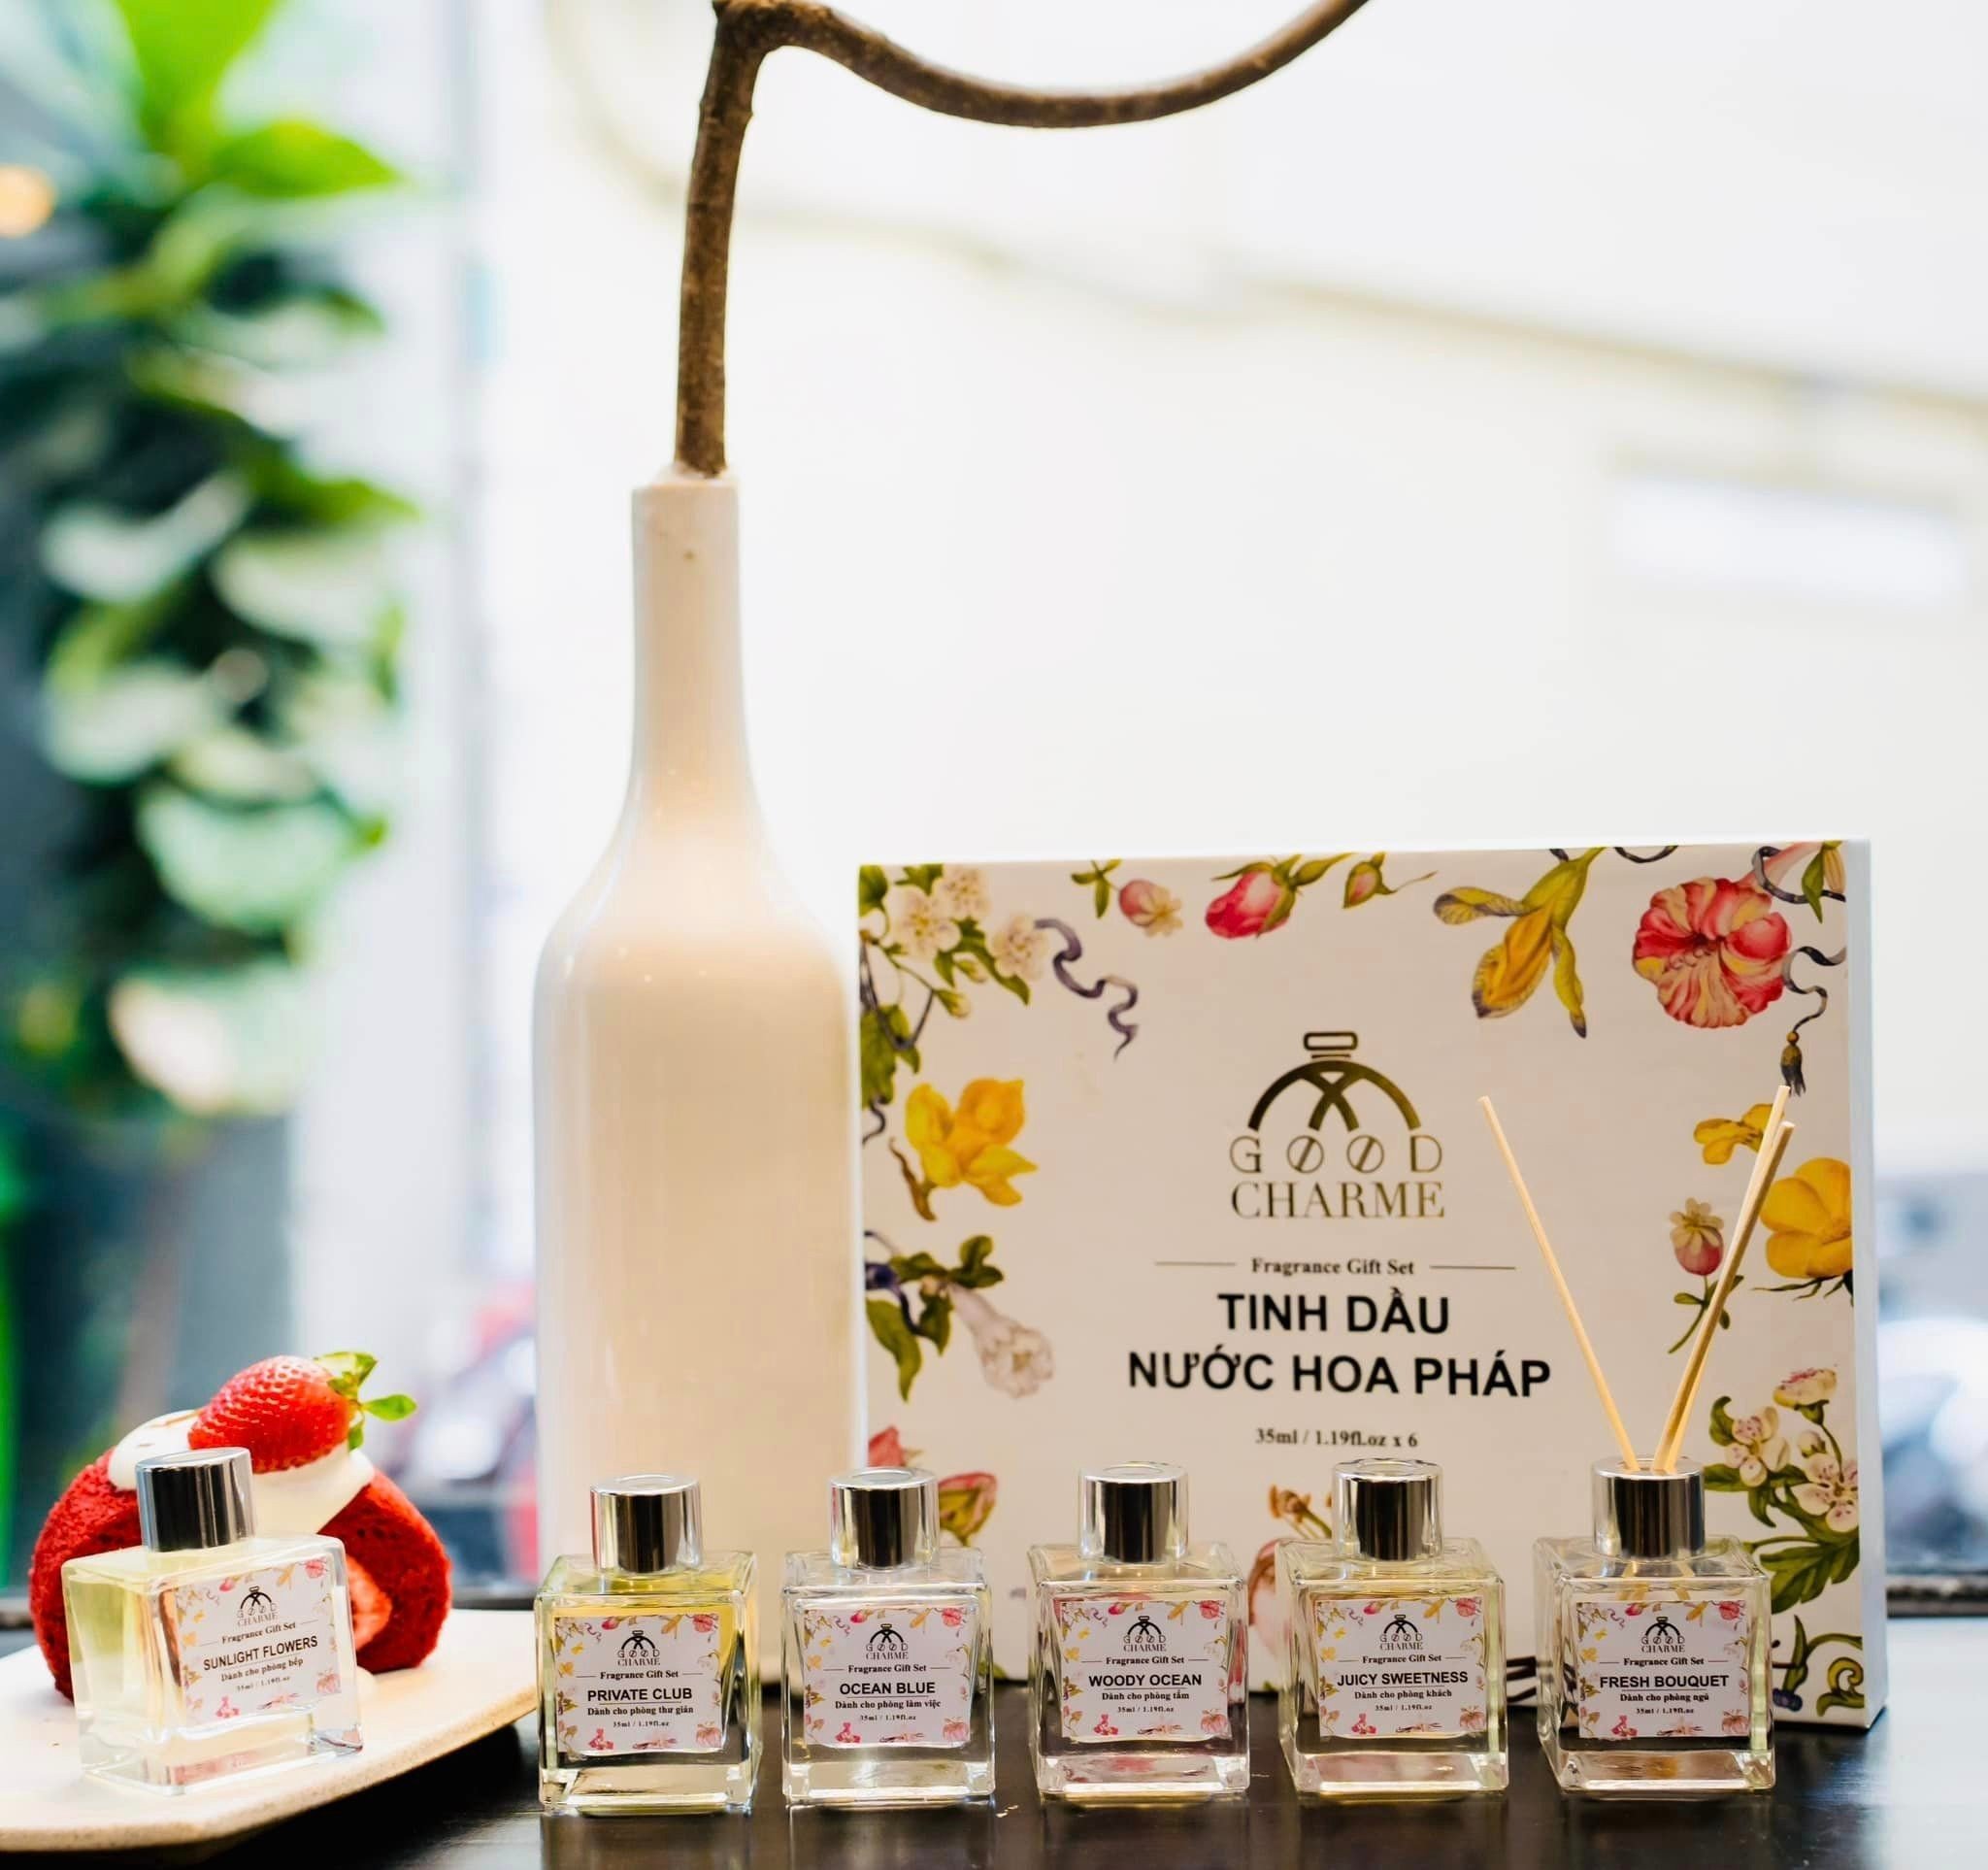 Tinh dầu nước hoa Pháp - Fragrance Gift Set